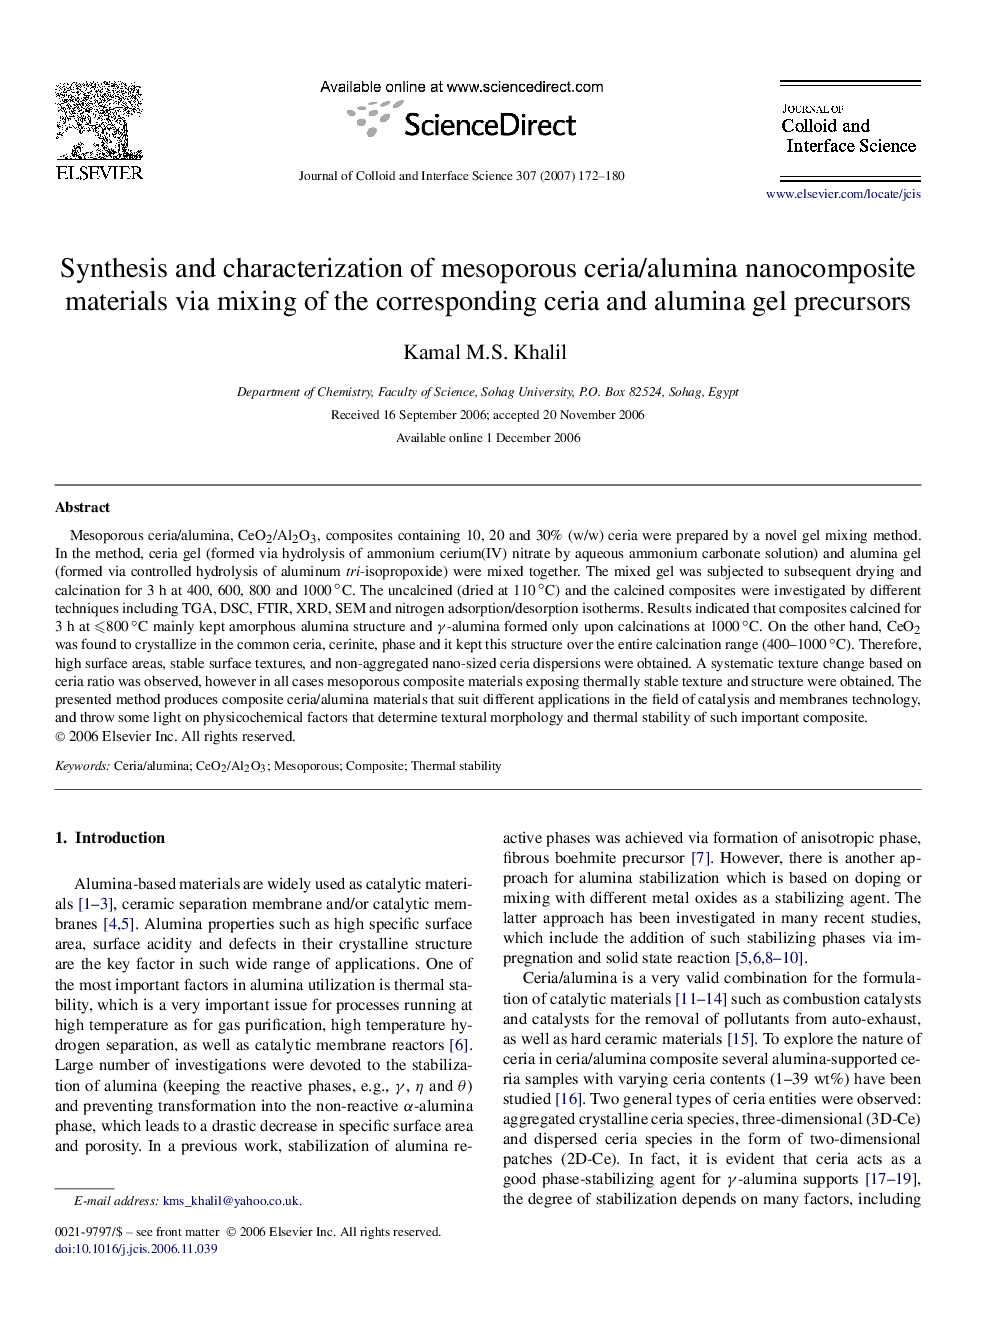 Synthesis and characterization of mesoporous ceria/alumina nanocomposite materials via mixing of the corresponding ceria and alumina gel precursors